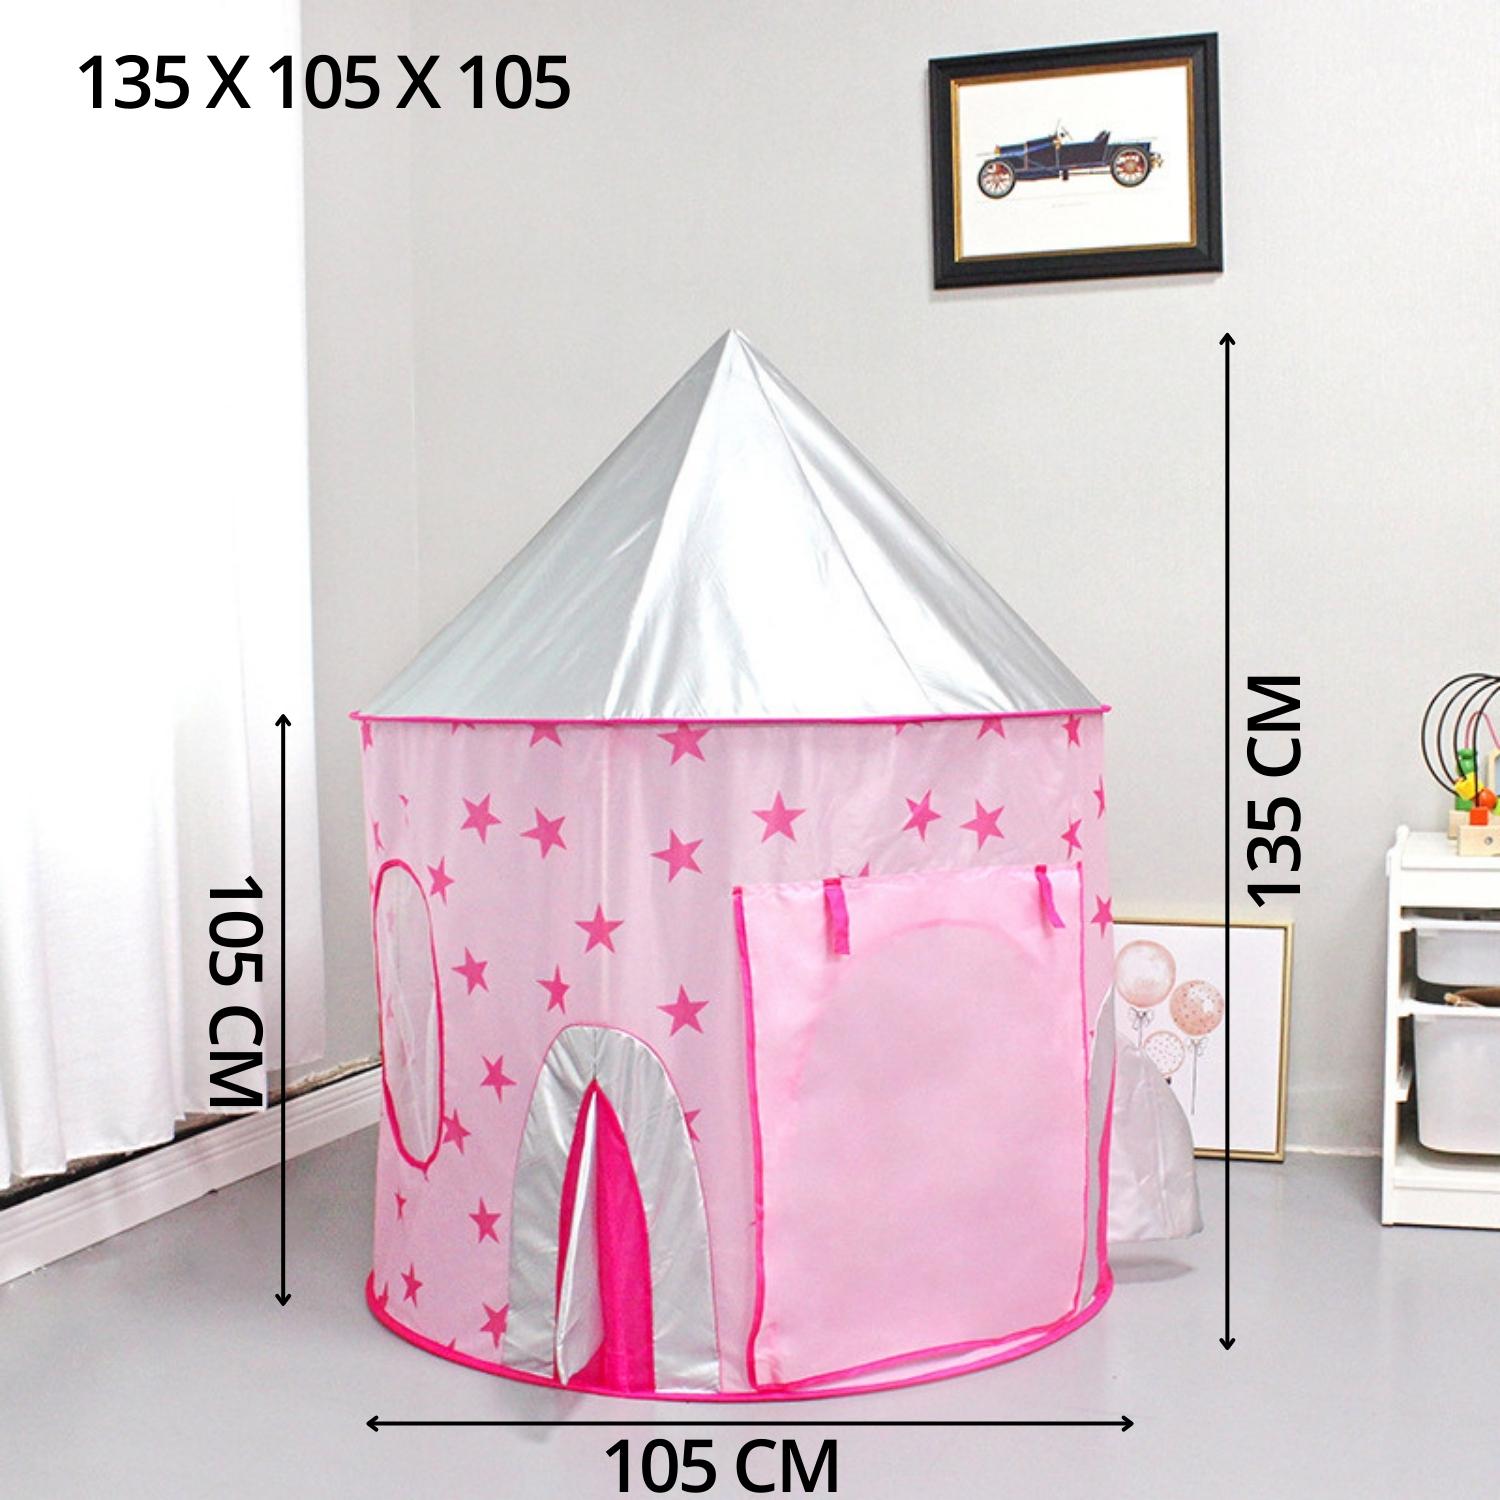 GOMINIMO Kids Space Capsule Tent (Pink)